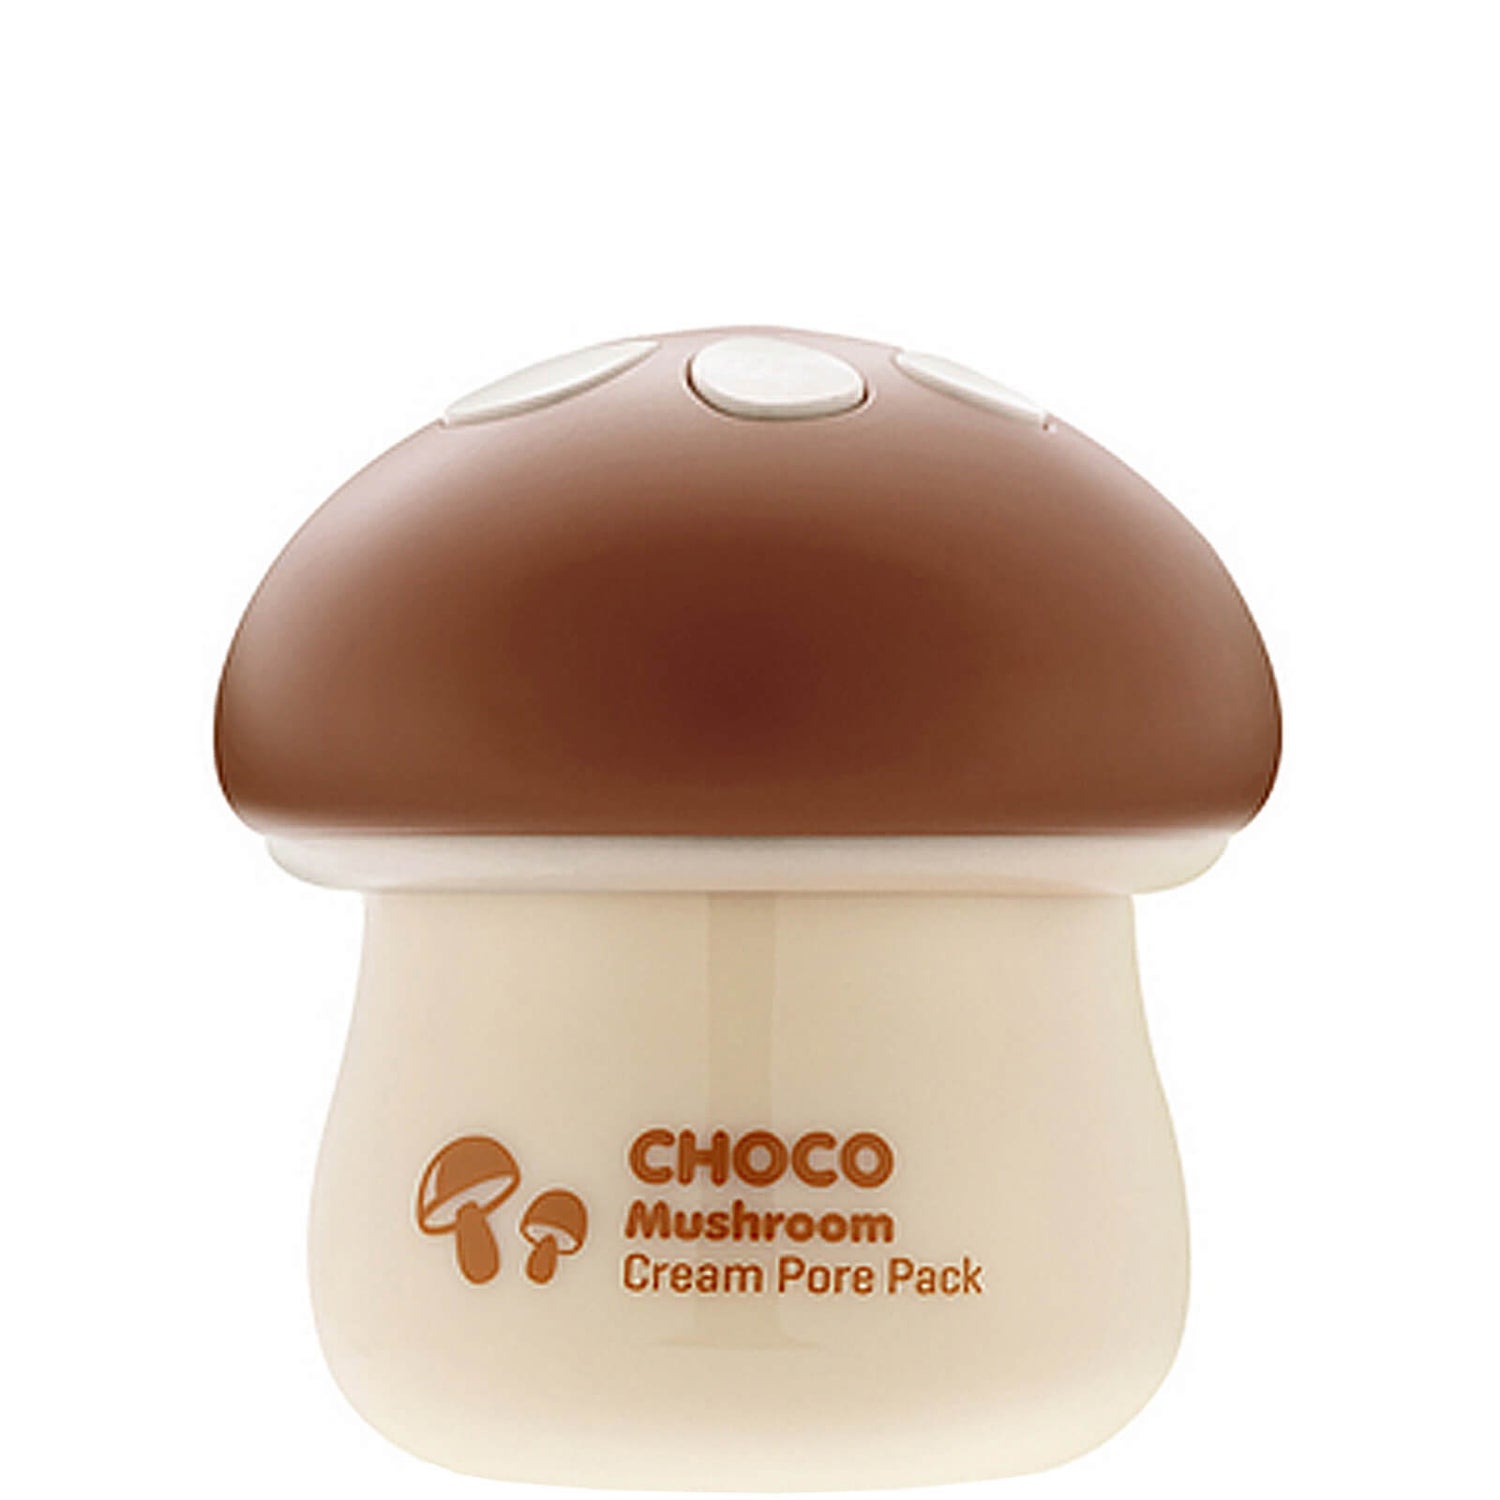 TONYMOLY Choco Mushroom Cream Pore Pack